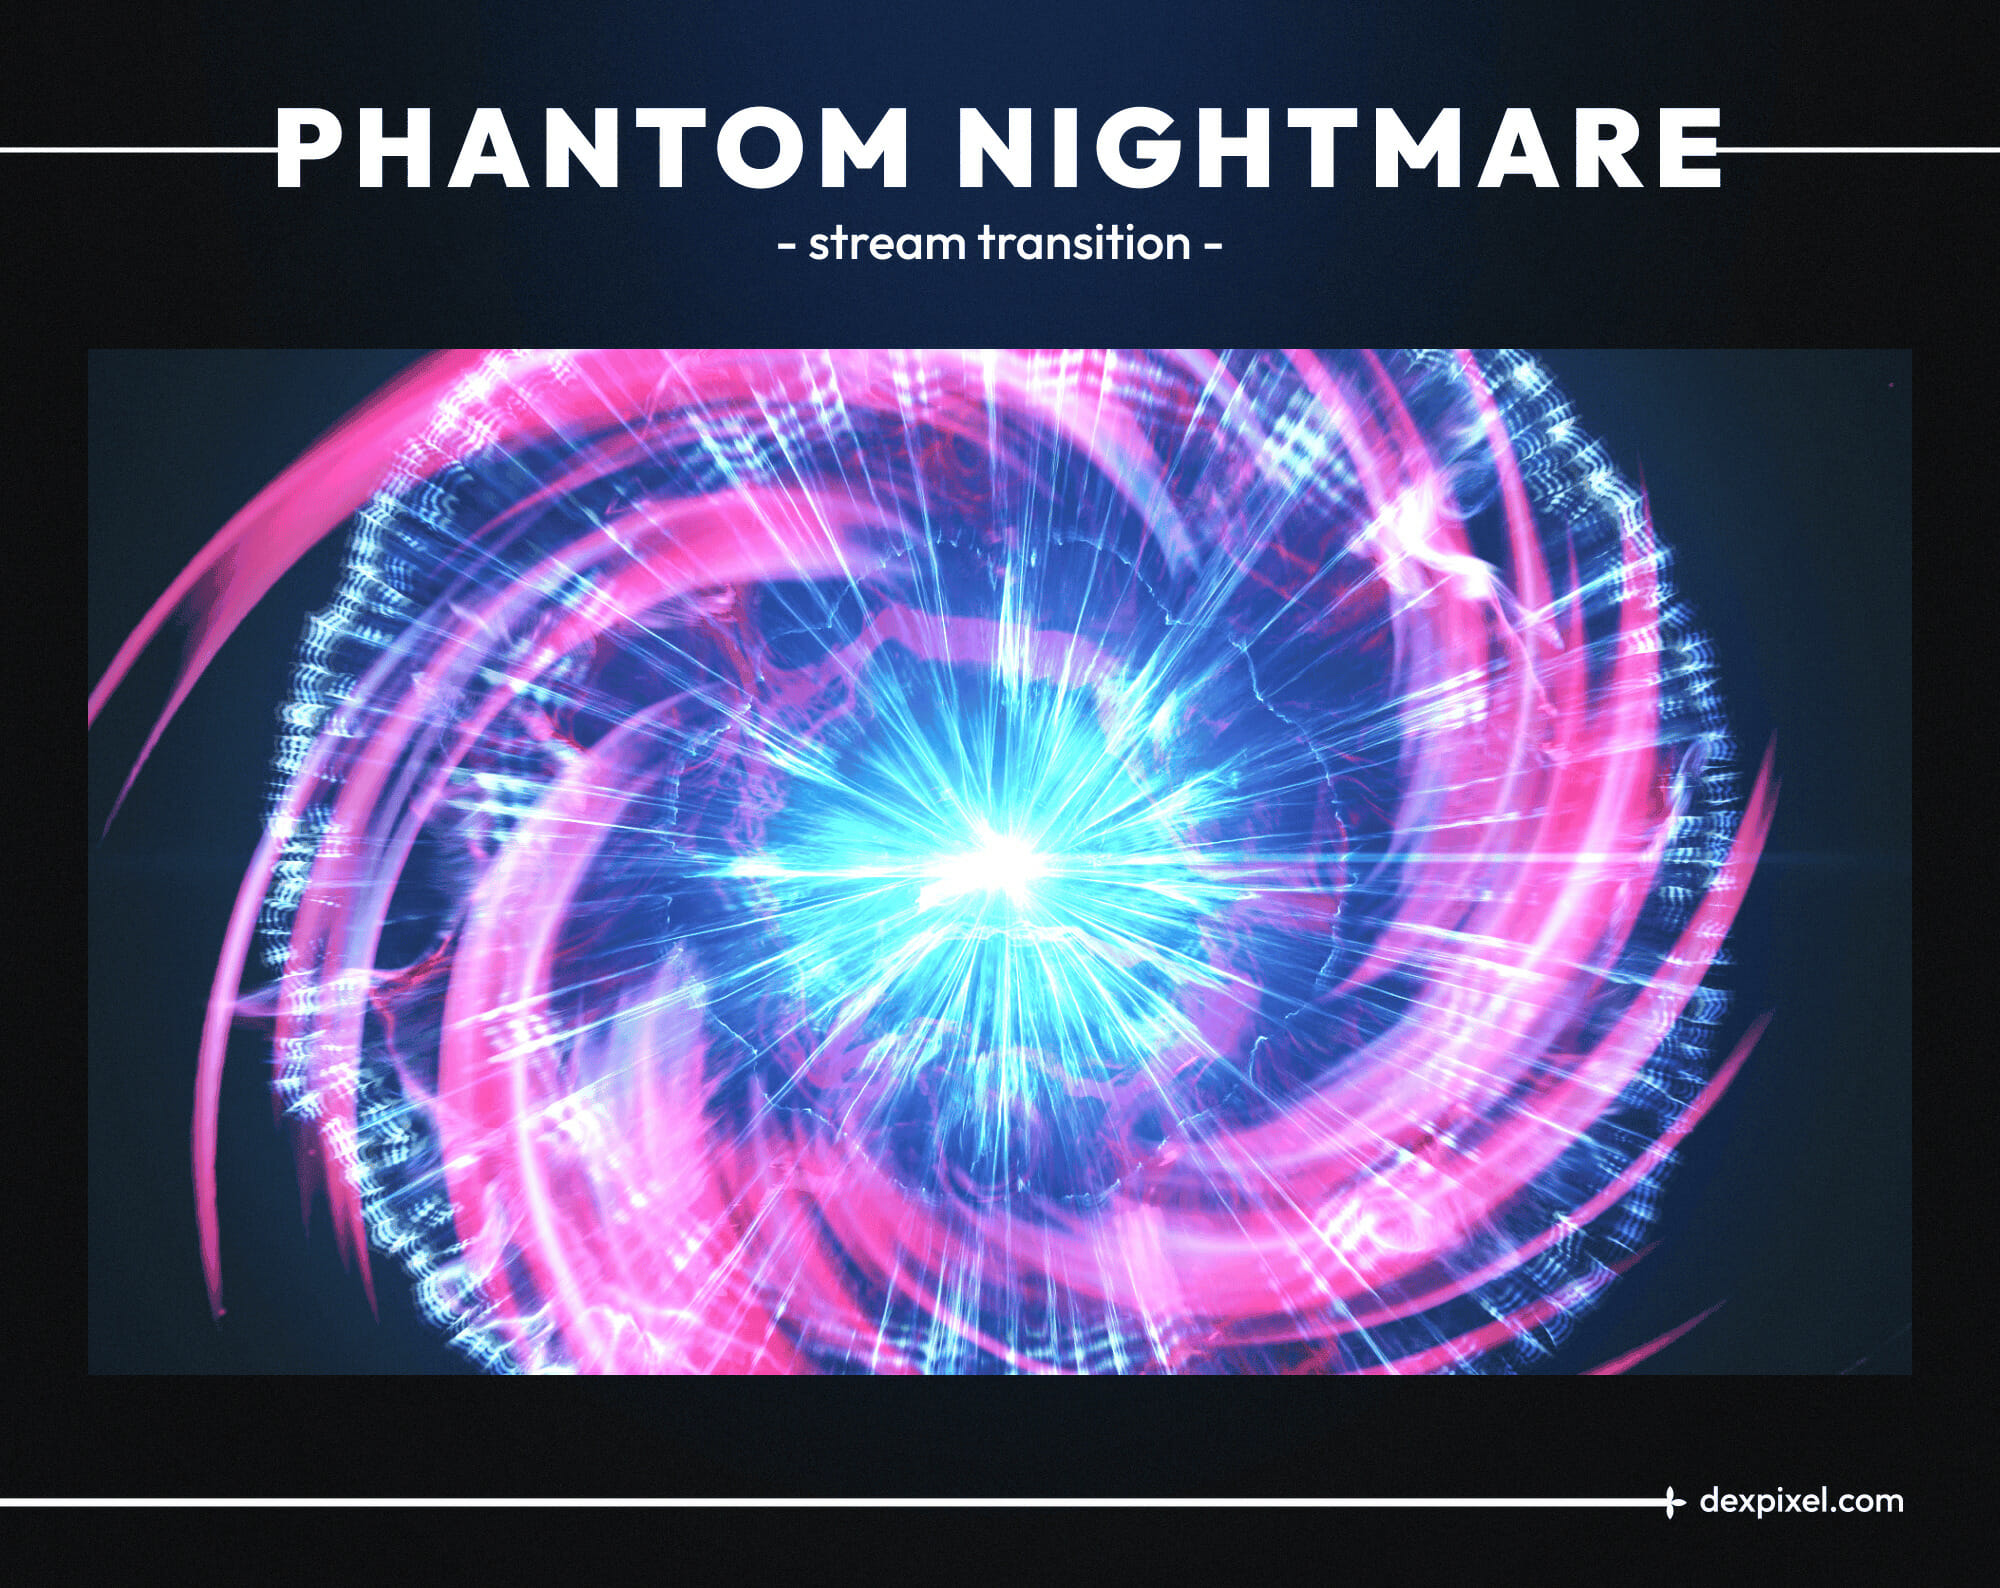 Phantom Nightmare Stream Transition 2